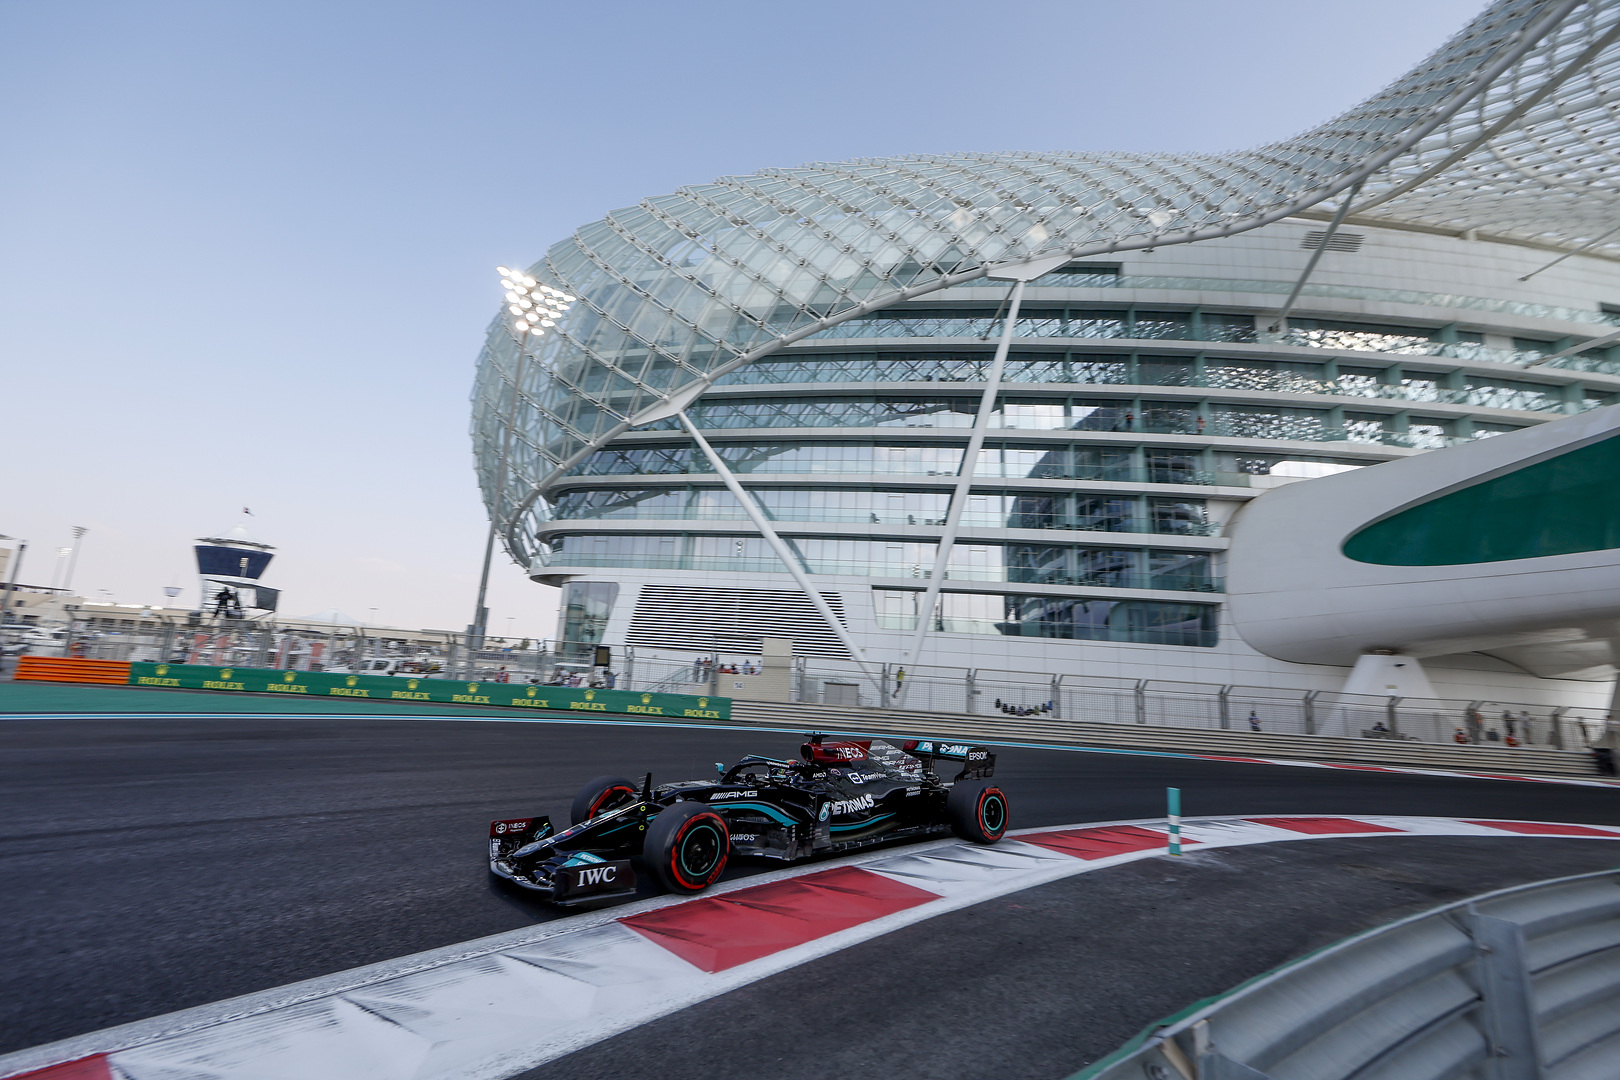 2021 Abu Dhabi Grand Prix, Saturday - Lewis Hamilton